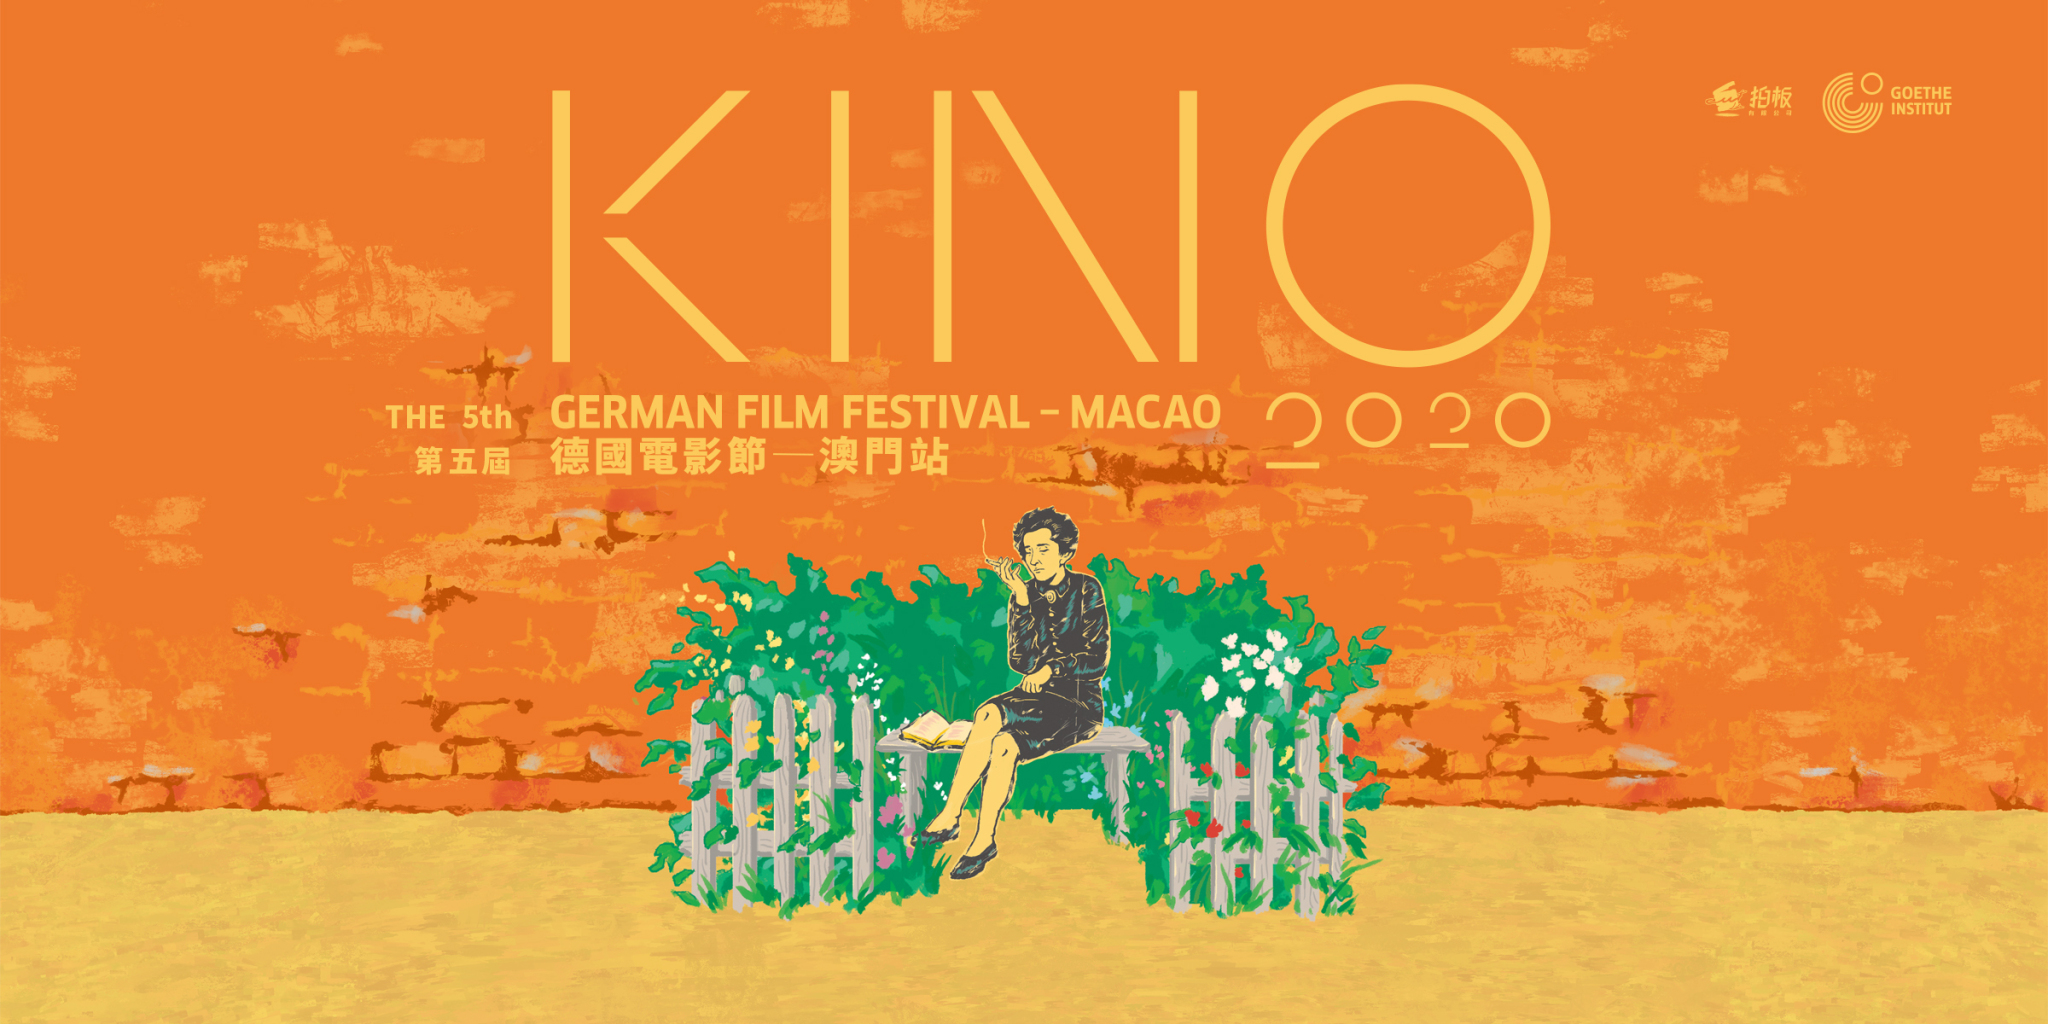 kino festival 2020 macau banner